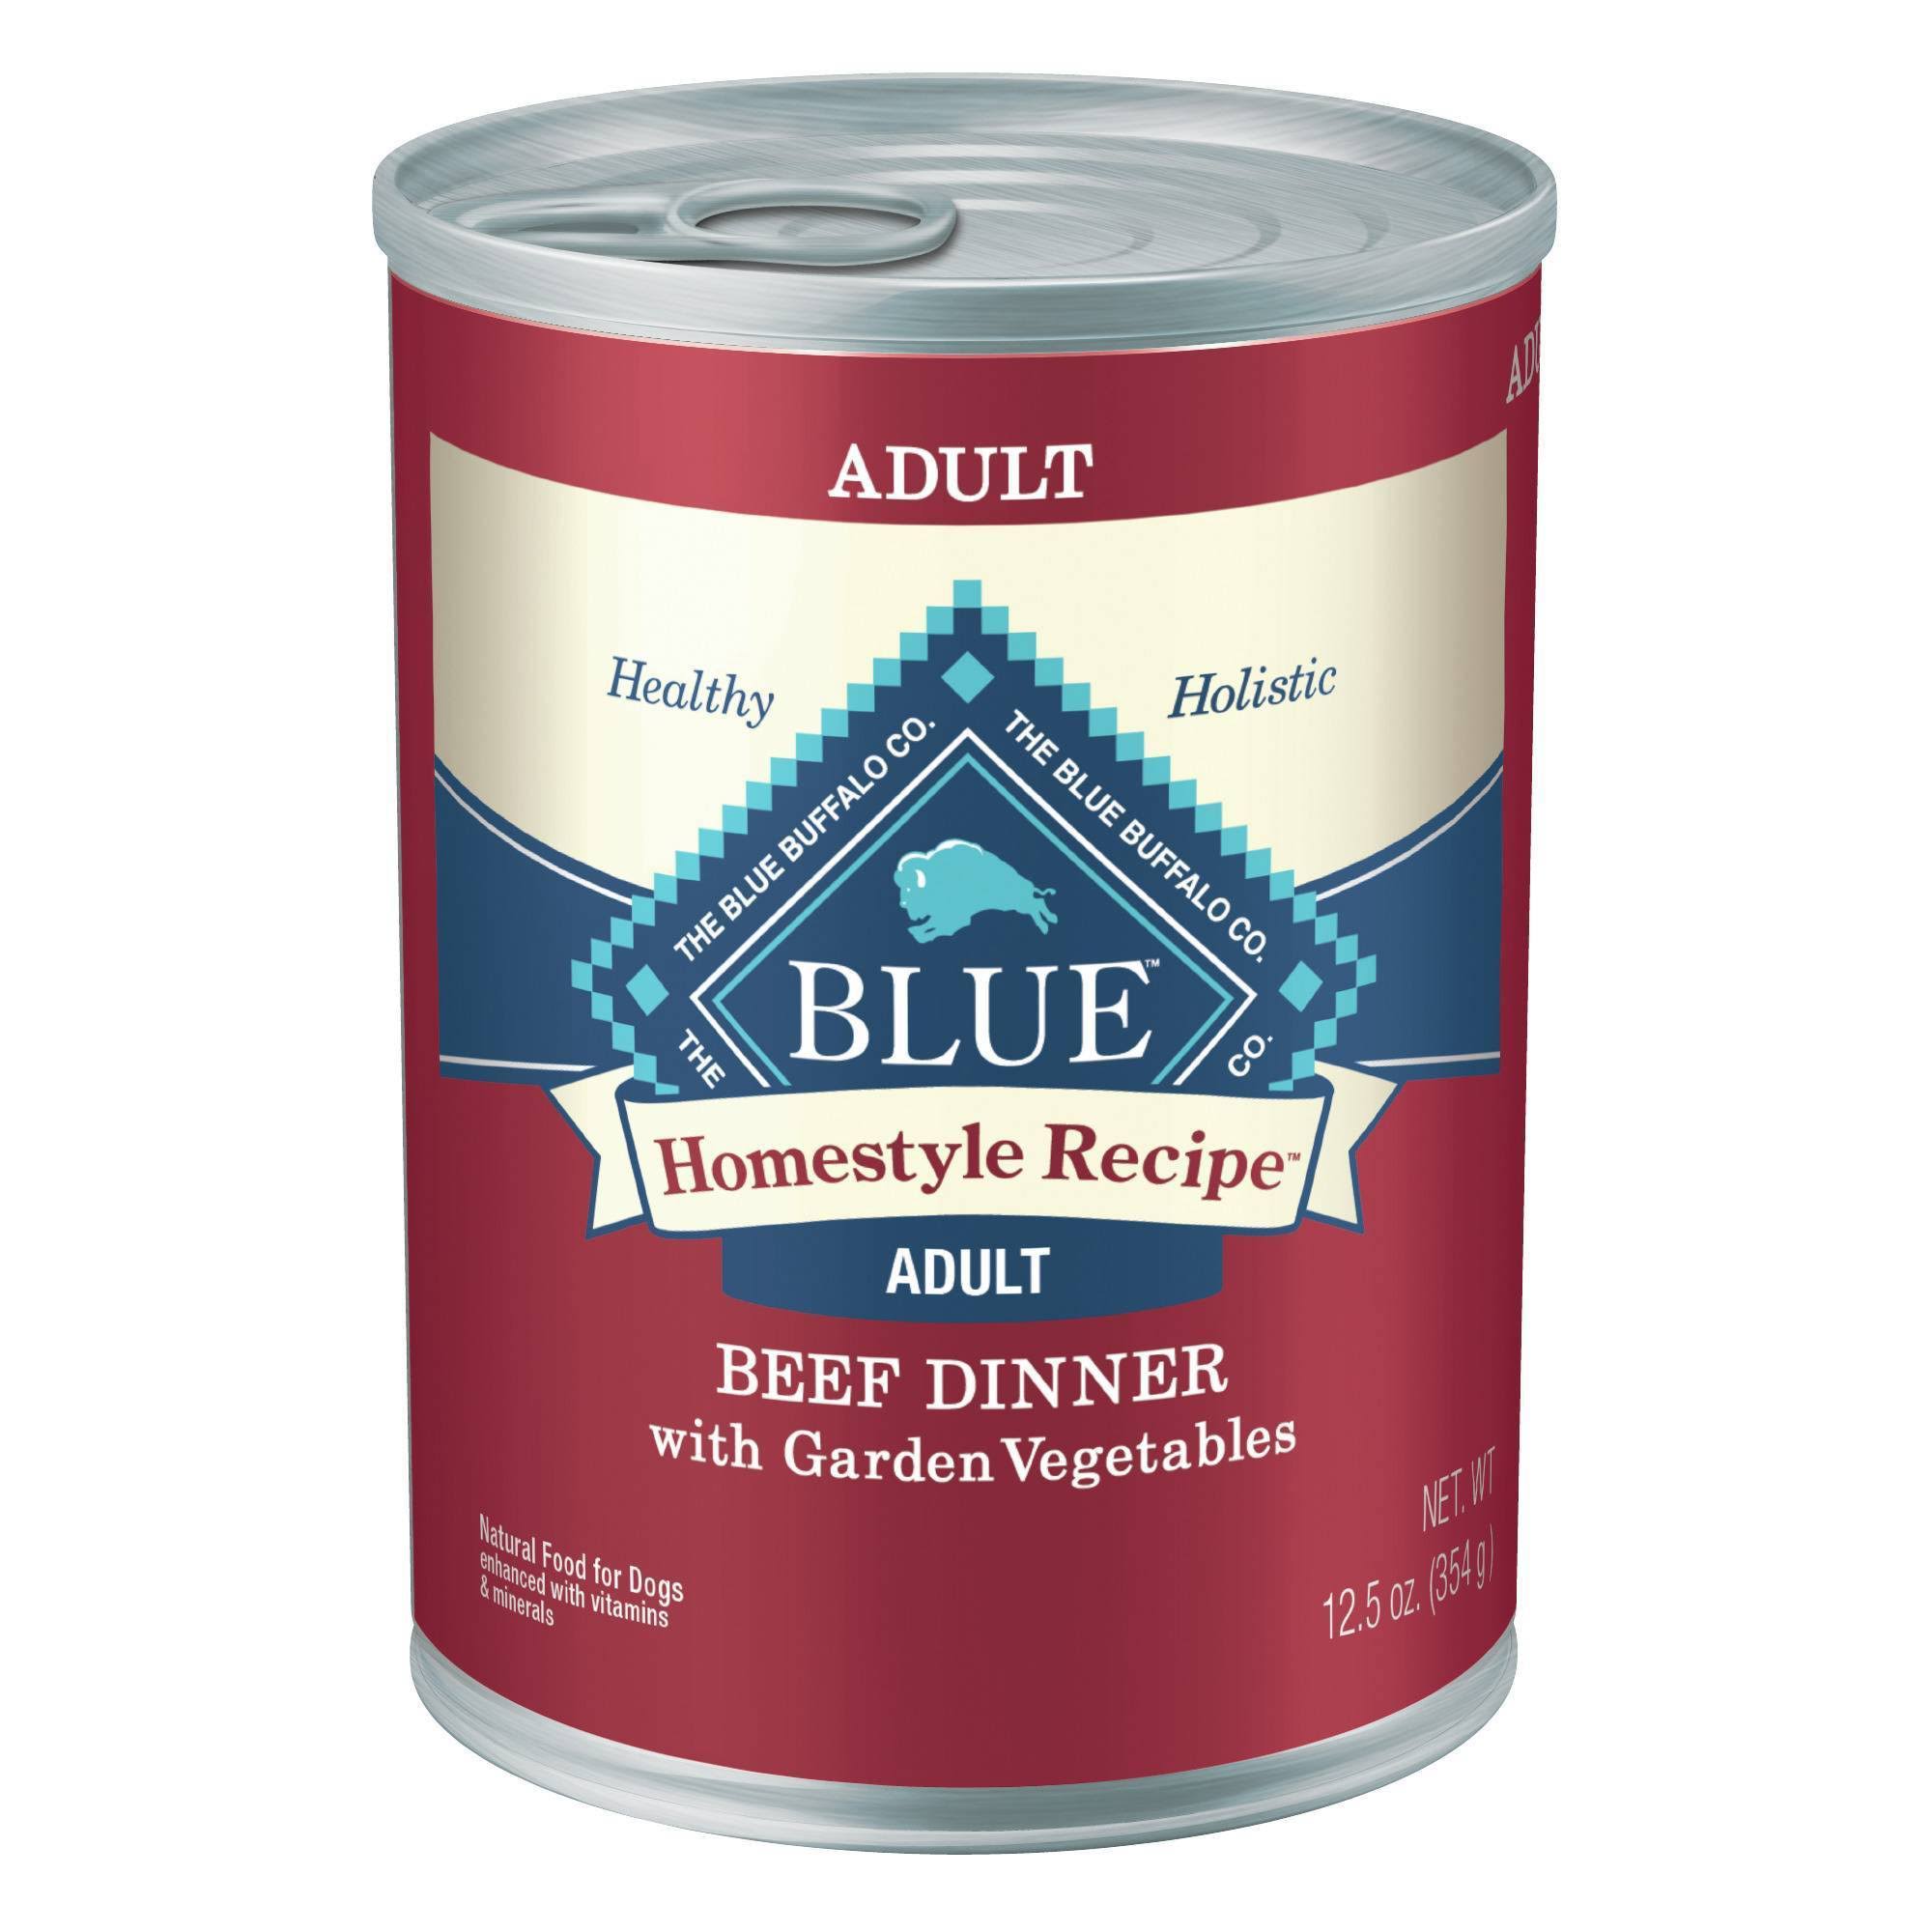 Blue Buffalo Homestyle Recipe Canned Dog Food - Beef Dinner, 12.5oz